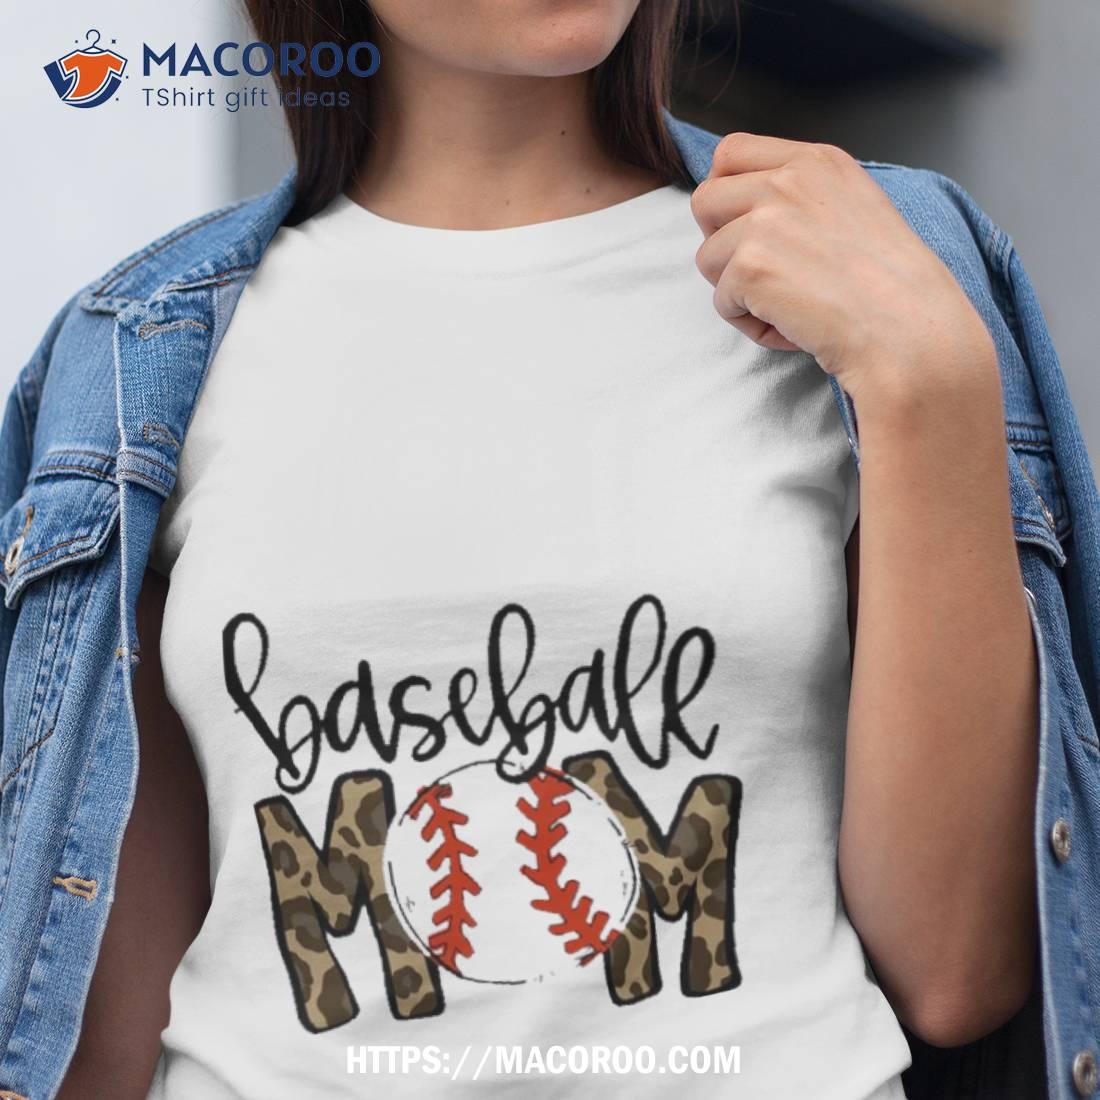 Custom Youth Womens Baseball Jerseys Baseball Mom Shirts Softball